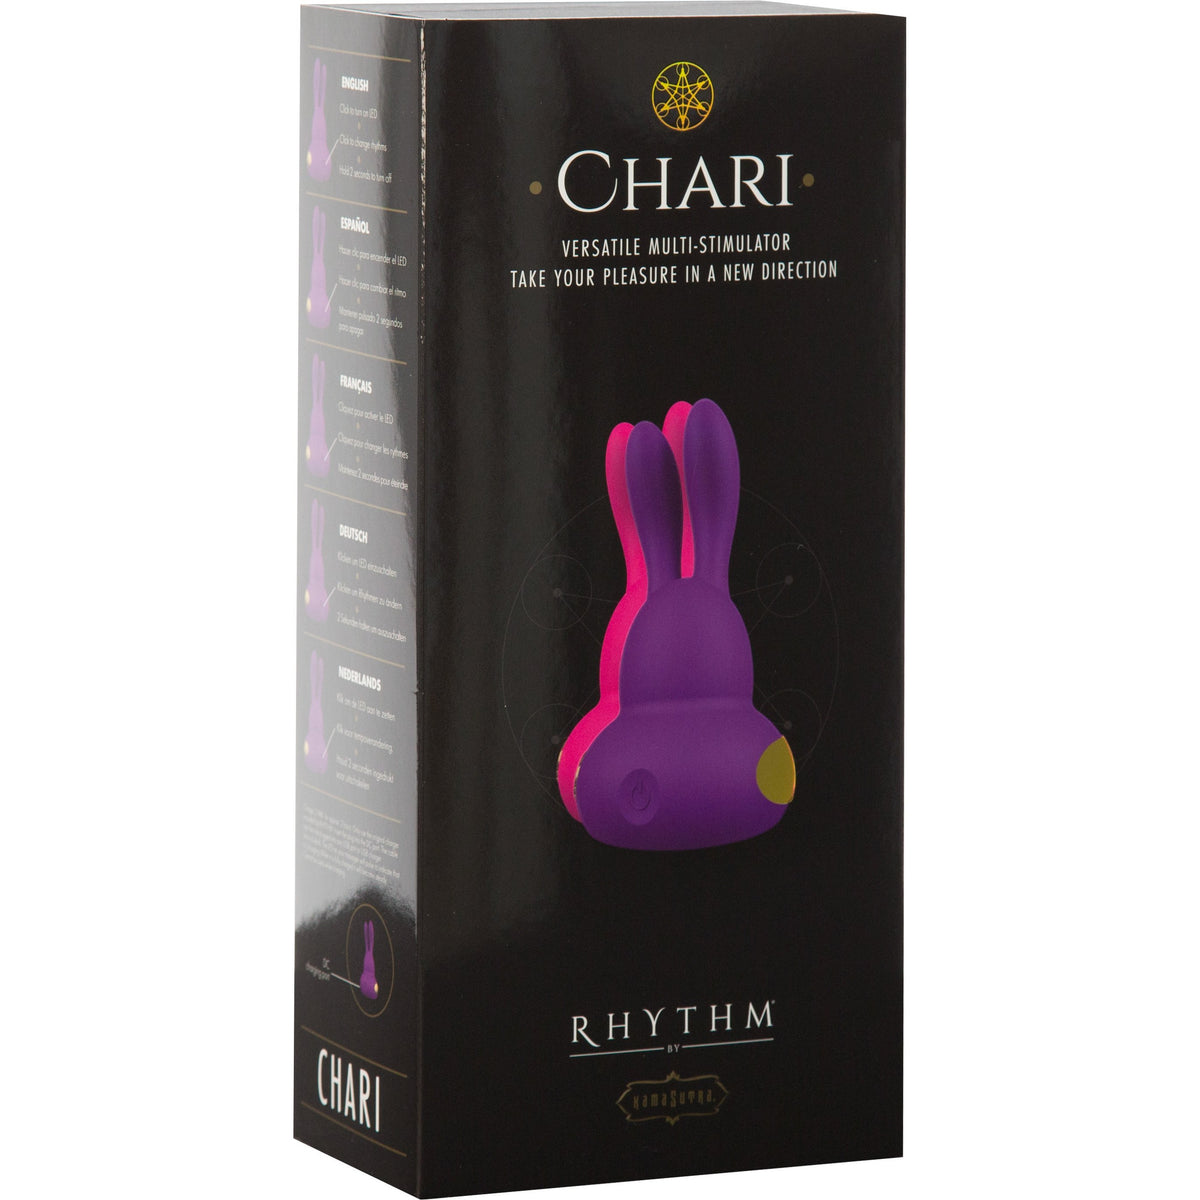 Kama Sutra Rhythm - Chari - Clitoral Vibrator - Pink